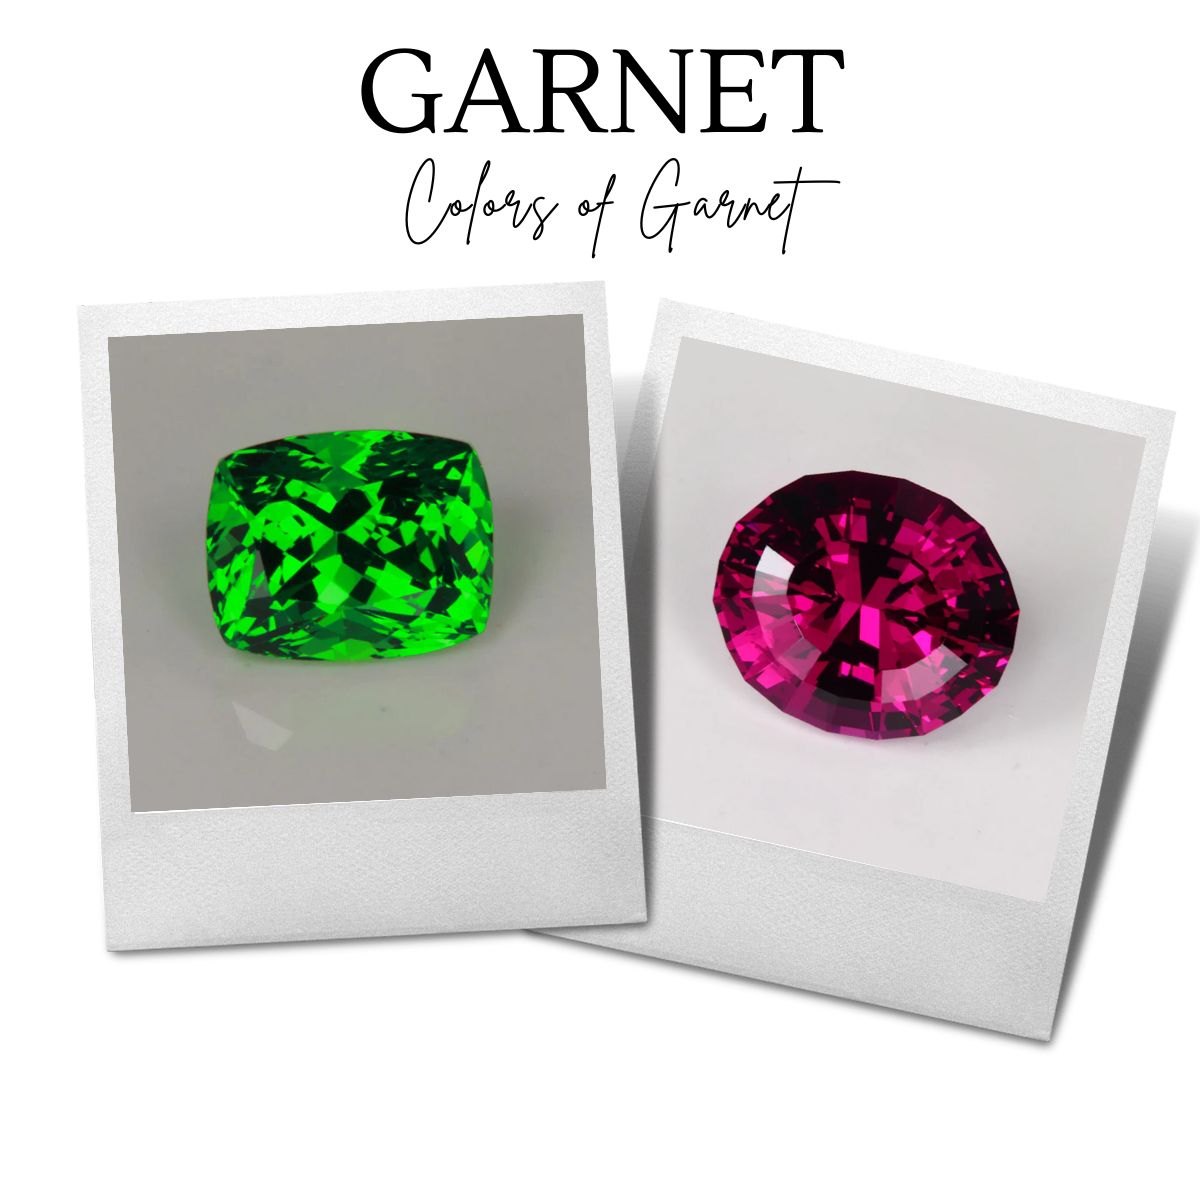 What Color is Garnet?